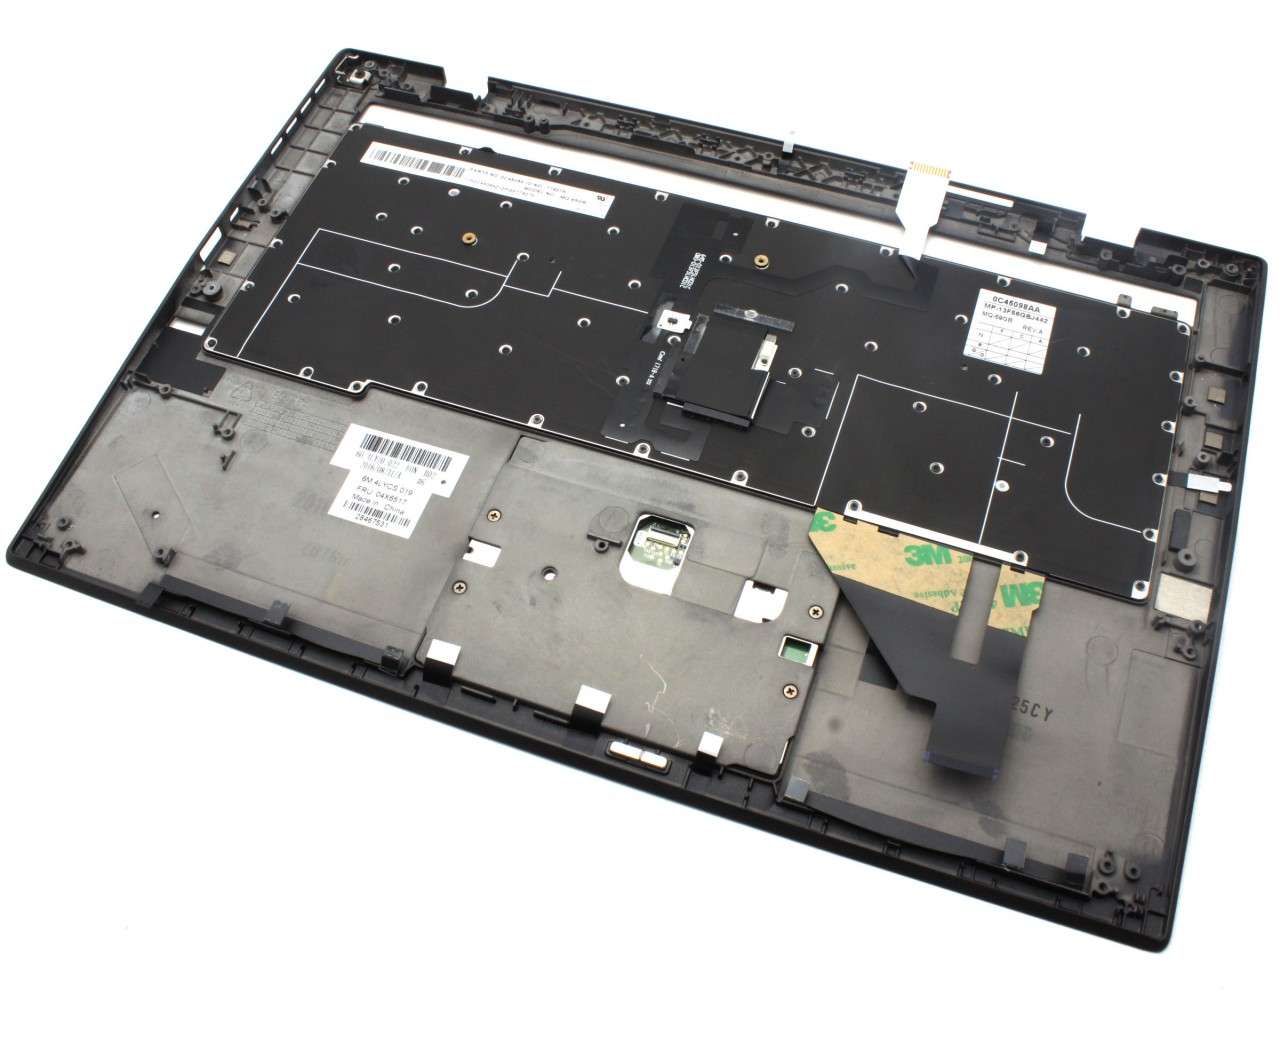 Tastatura Lenovo MP-13F56GBJ442 Neagra cu Palmrest Negru si TouchPad IBM